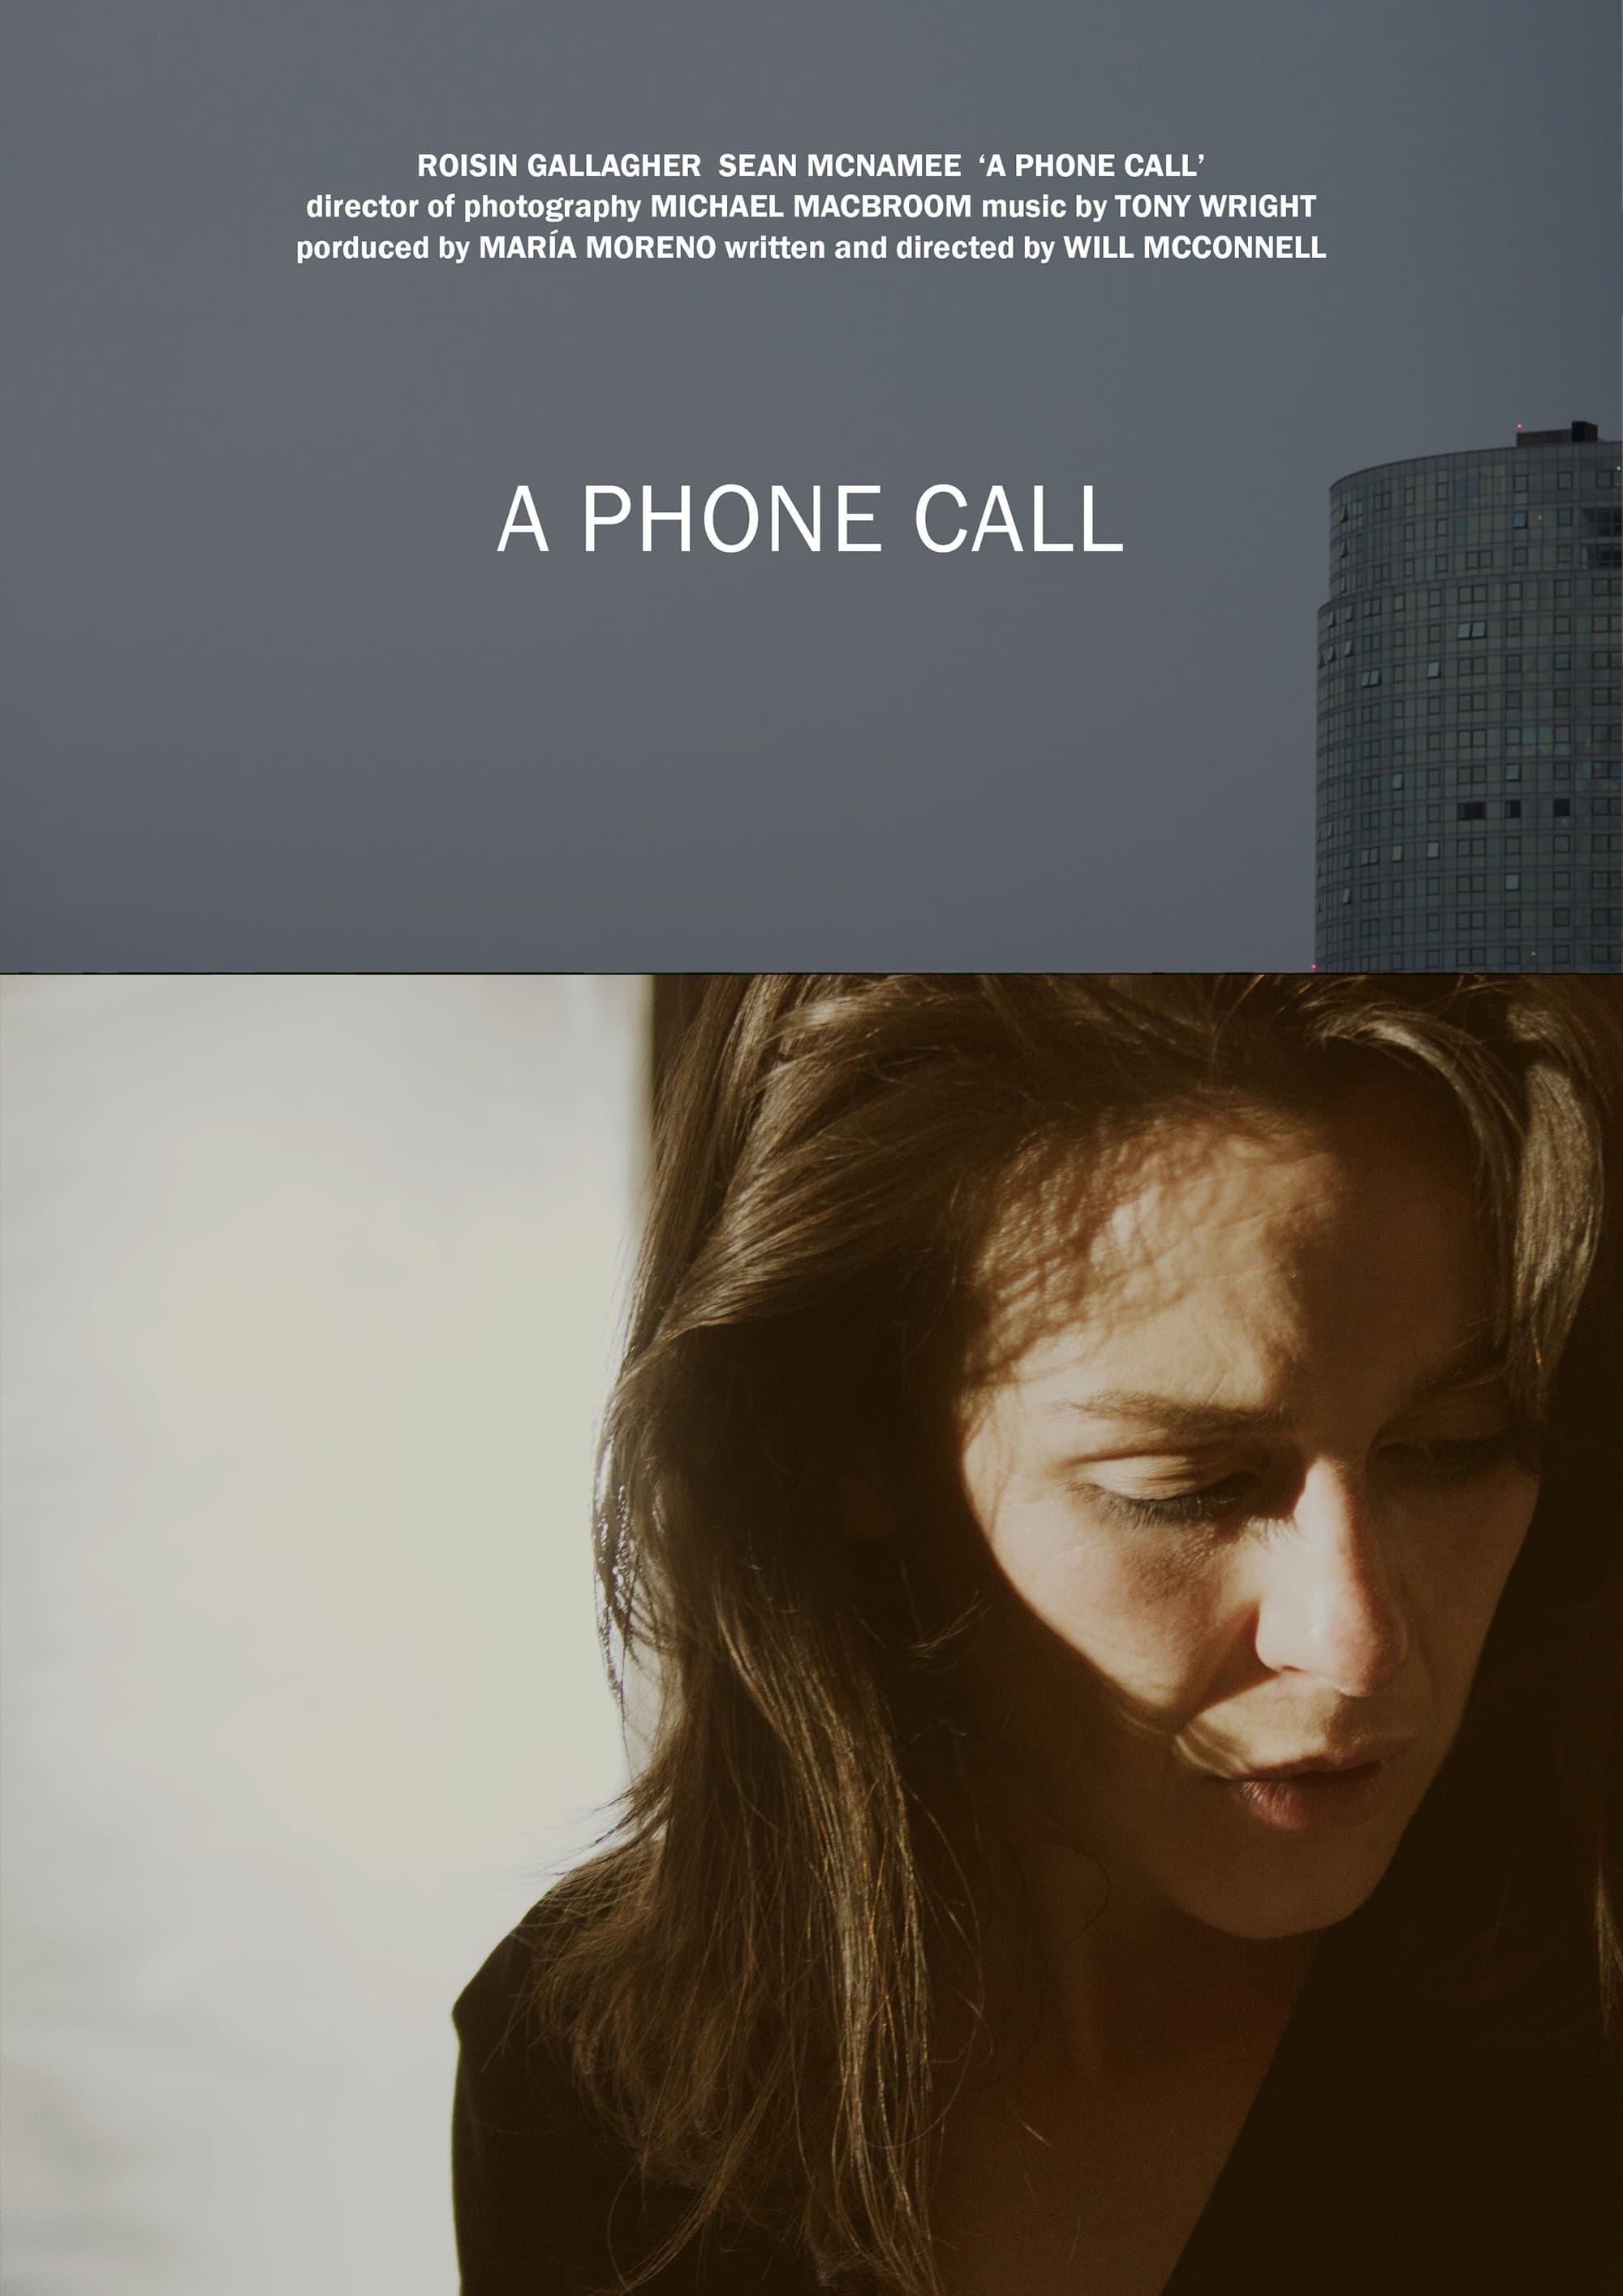 A Phone Call